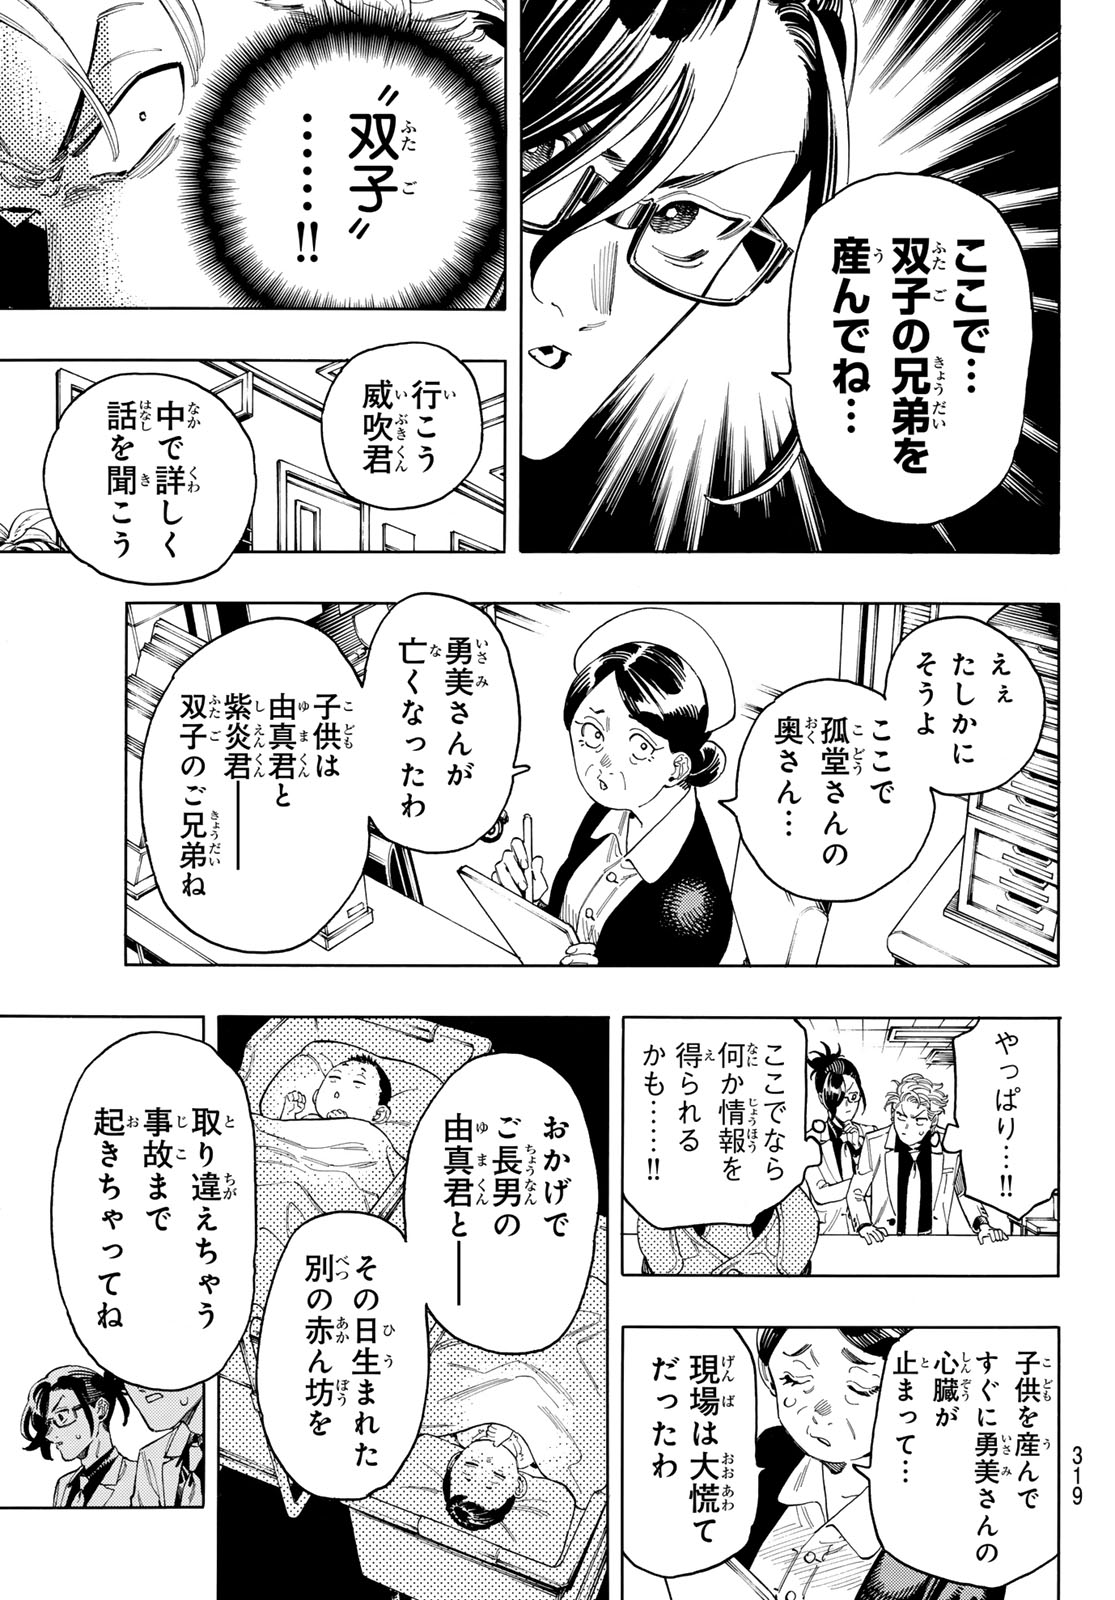 Akabane Honeko no Bodyguard - Chapter 84 - Page 13